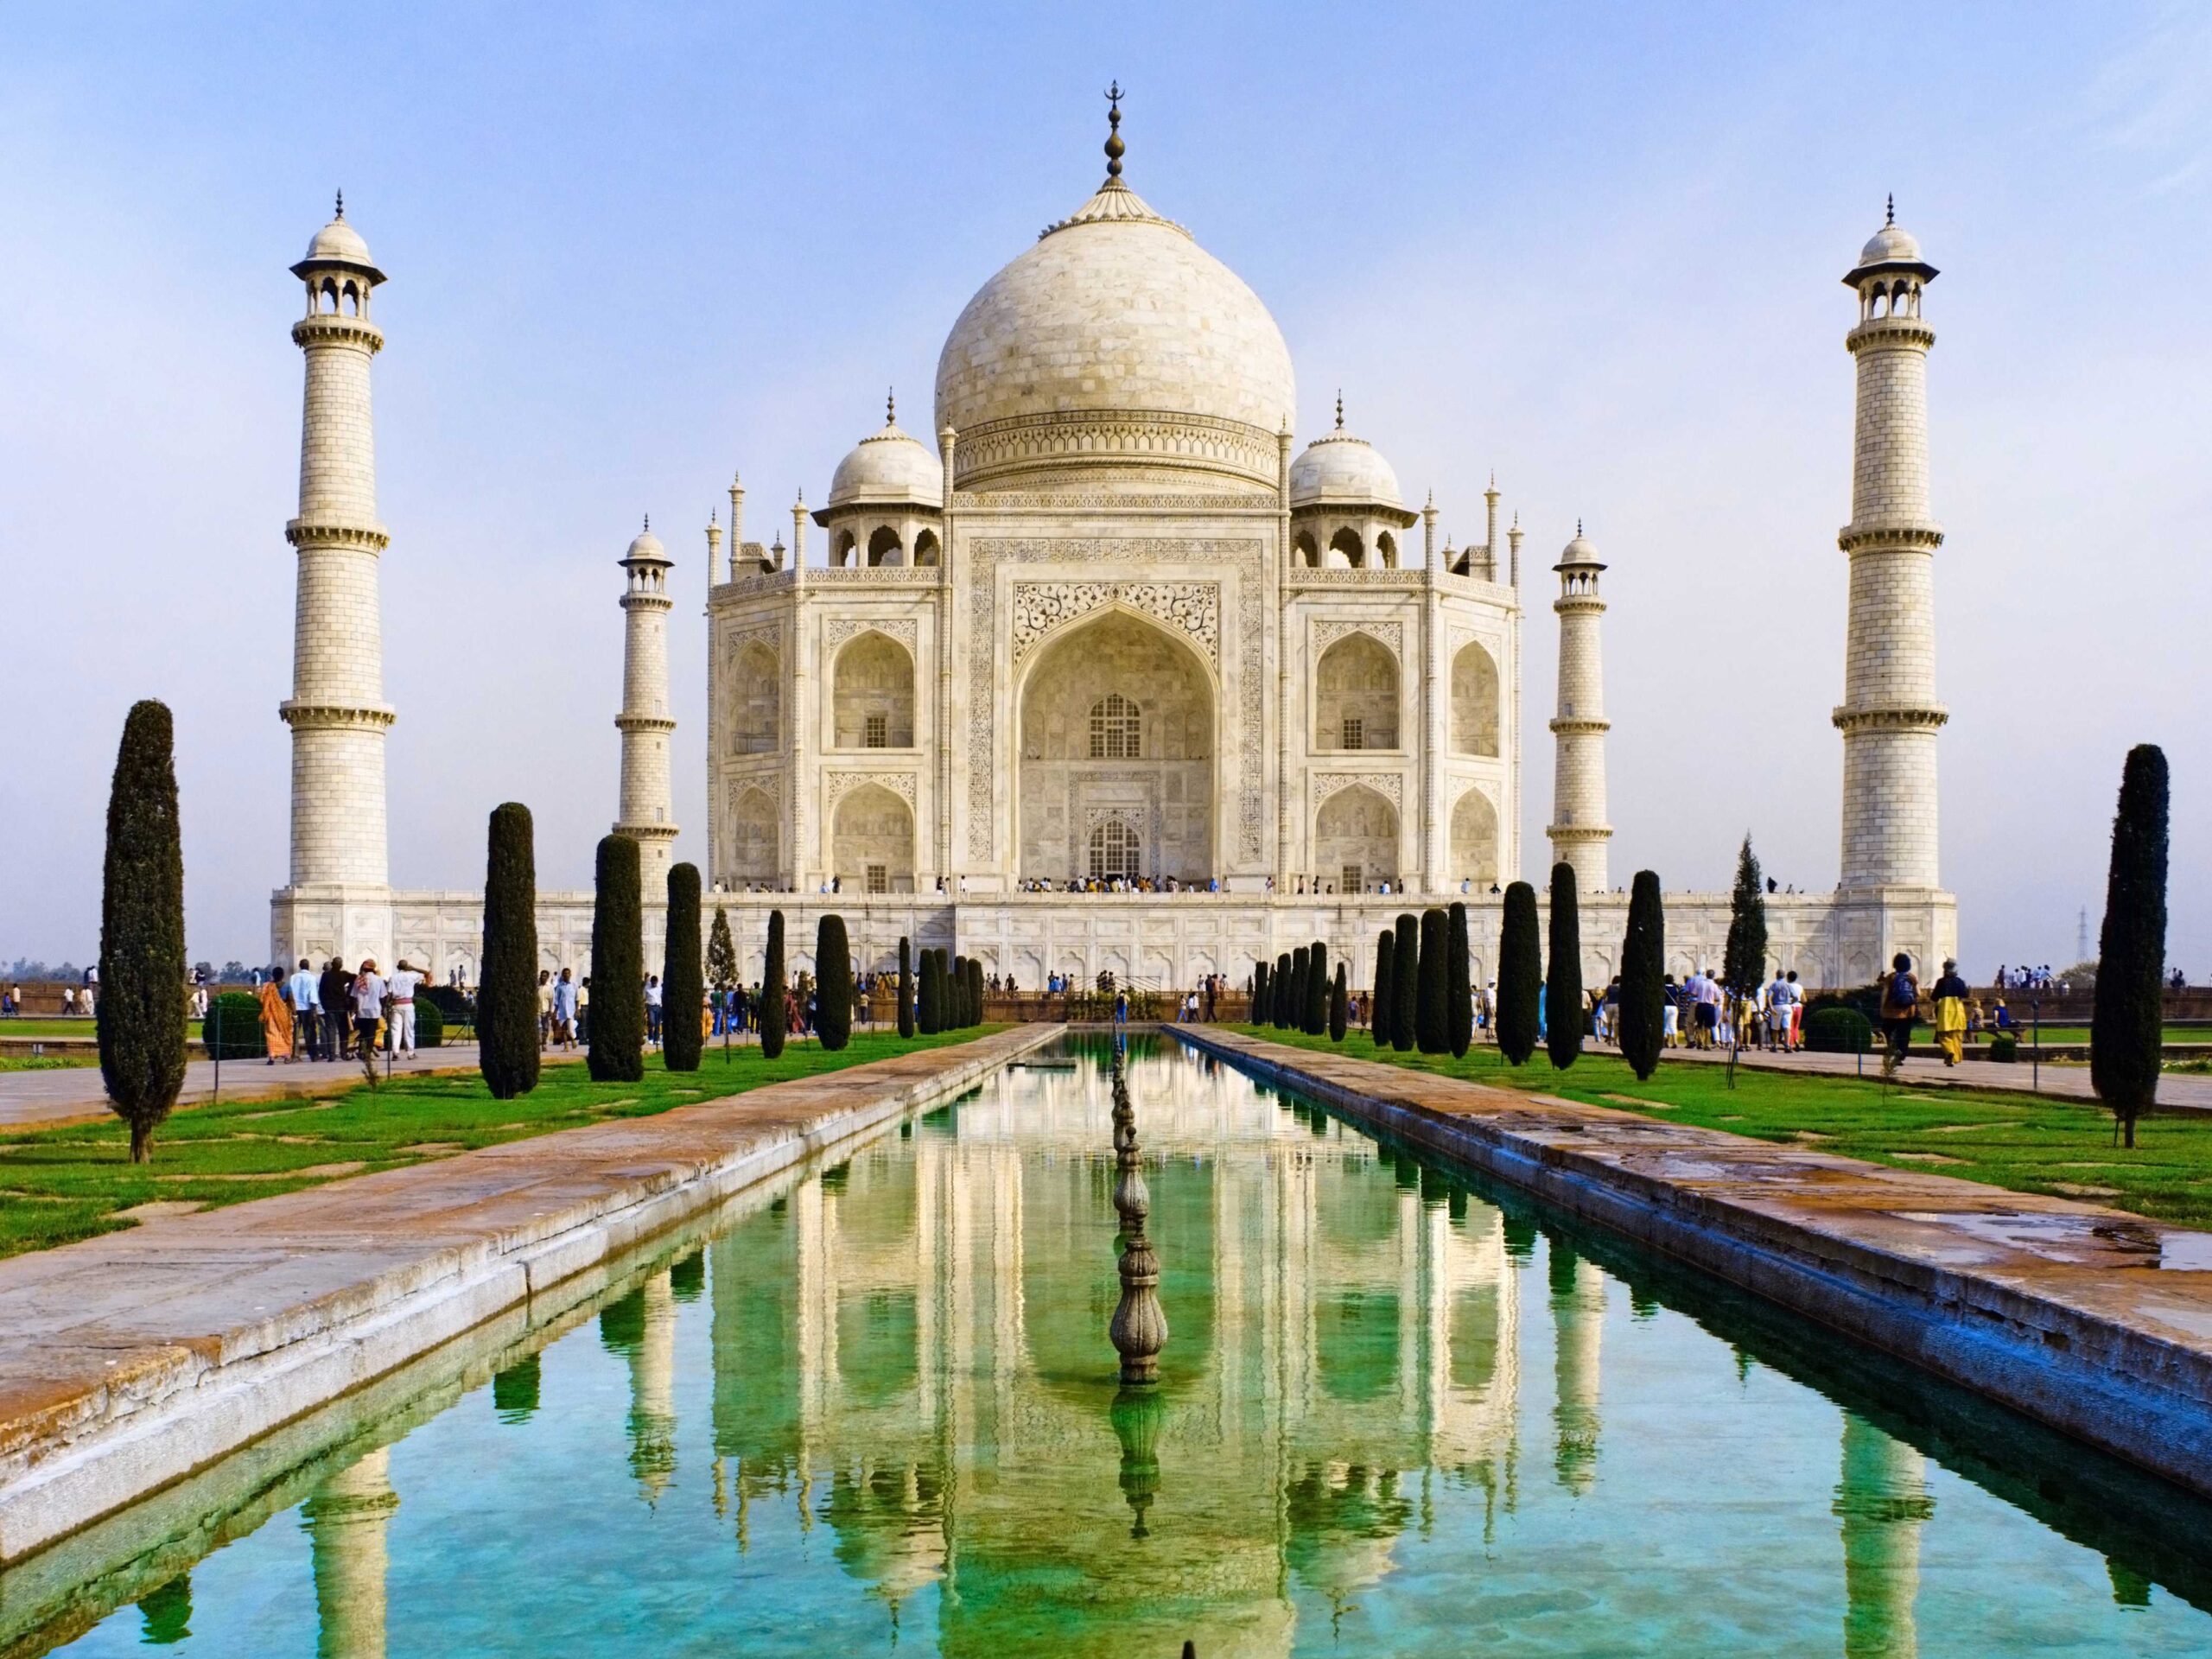 The Taj Mahal in Agra, India. (Photo: BusinessInsider.com)